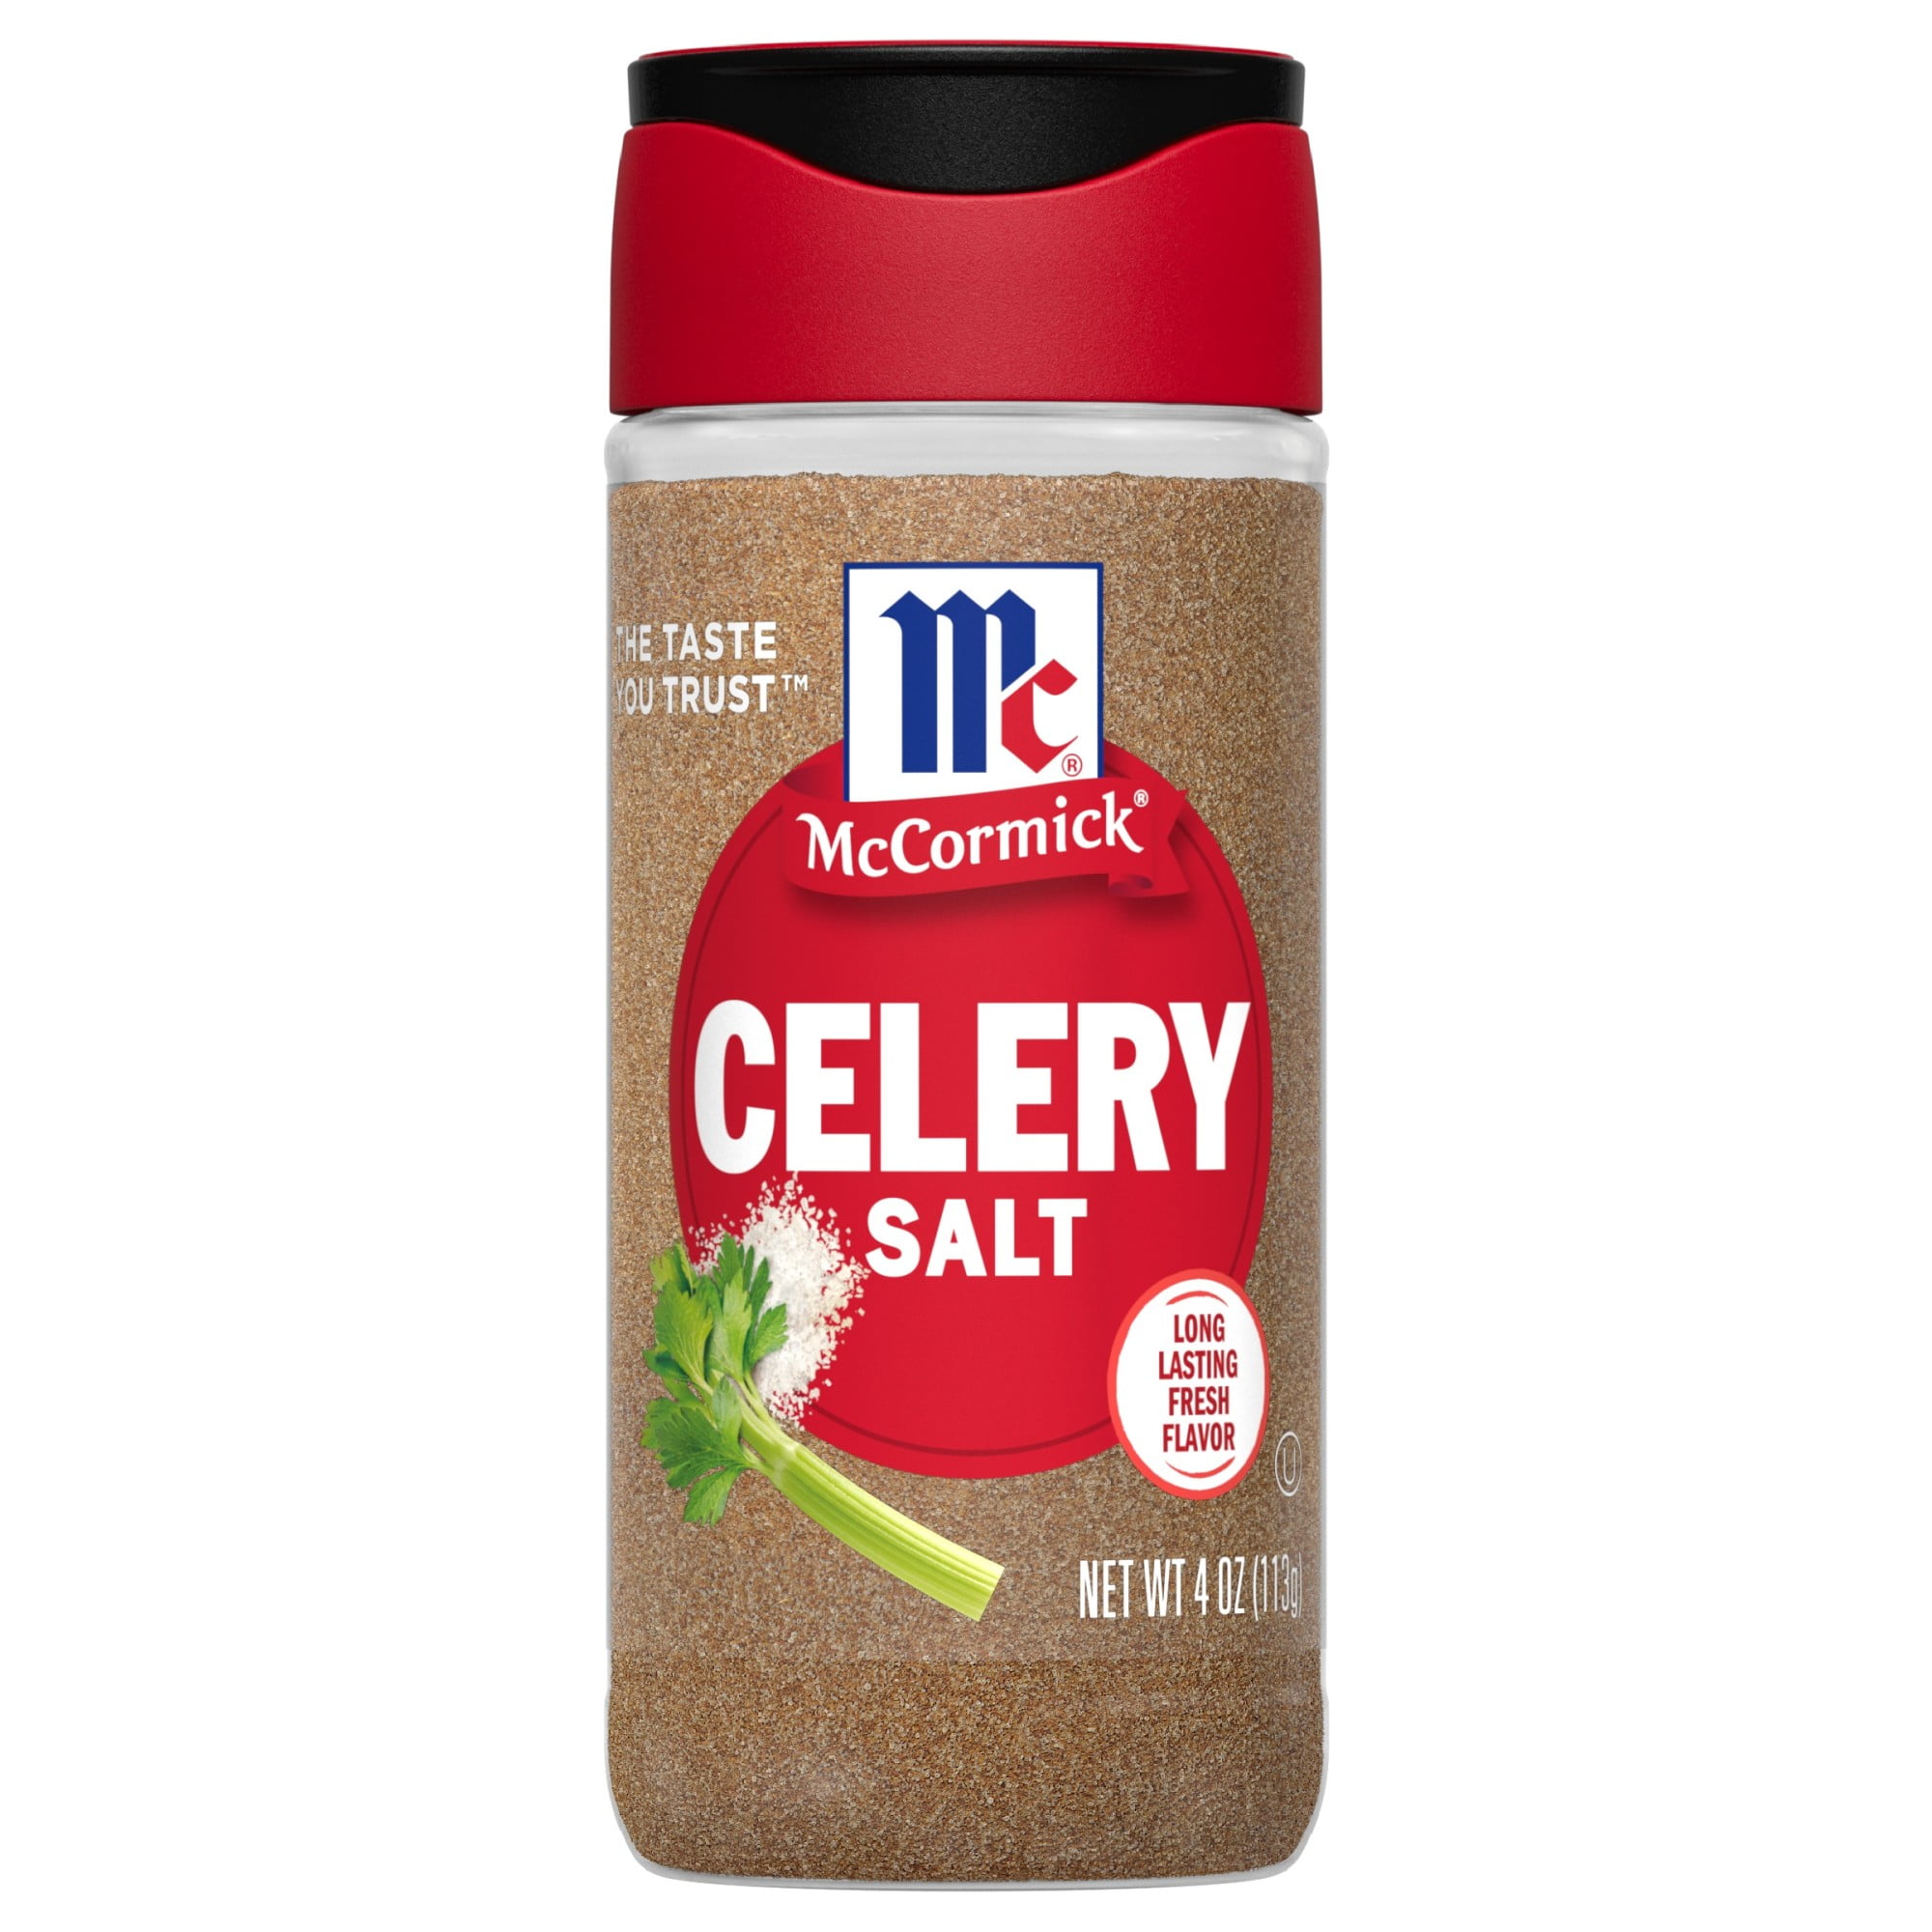 (4 pack) Morton Salt Season-All Seasoned Salt - for BBQ, Grilling, and  Potatoes, 16 oz